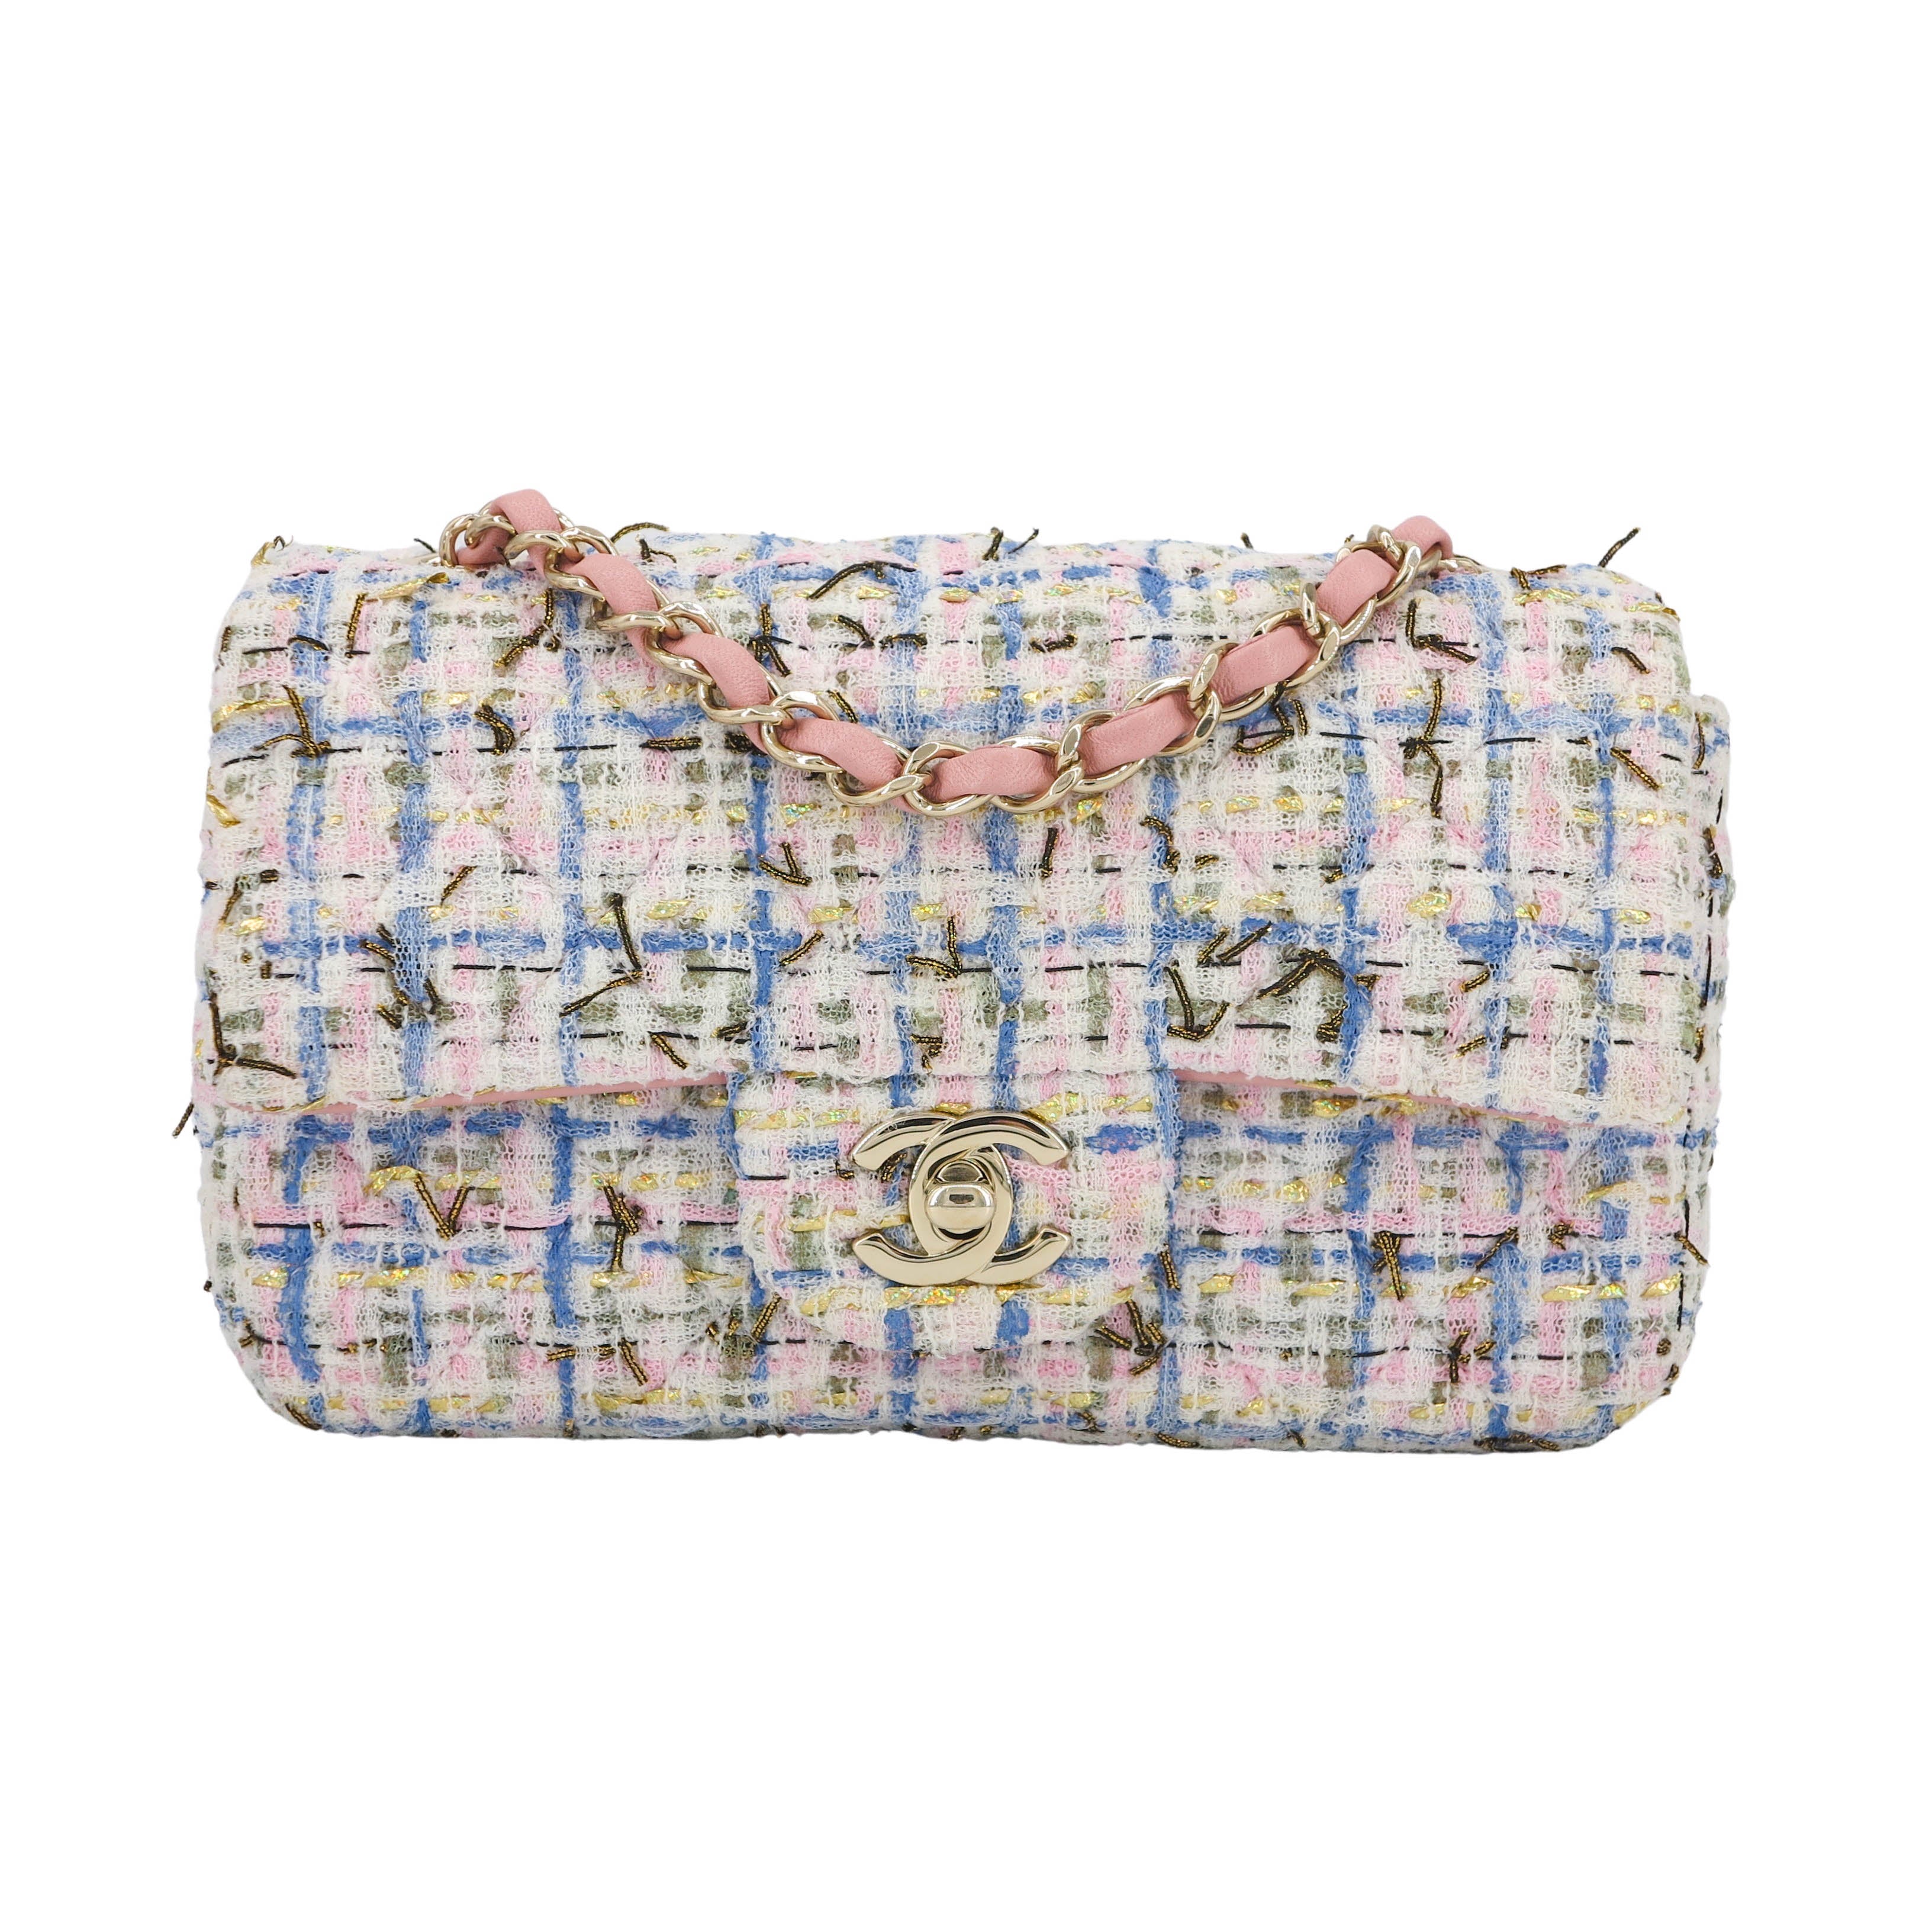 Chanel Mini Surpiqué Pochette - Blue Mini Bags, Handbags - CHA484115